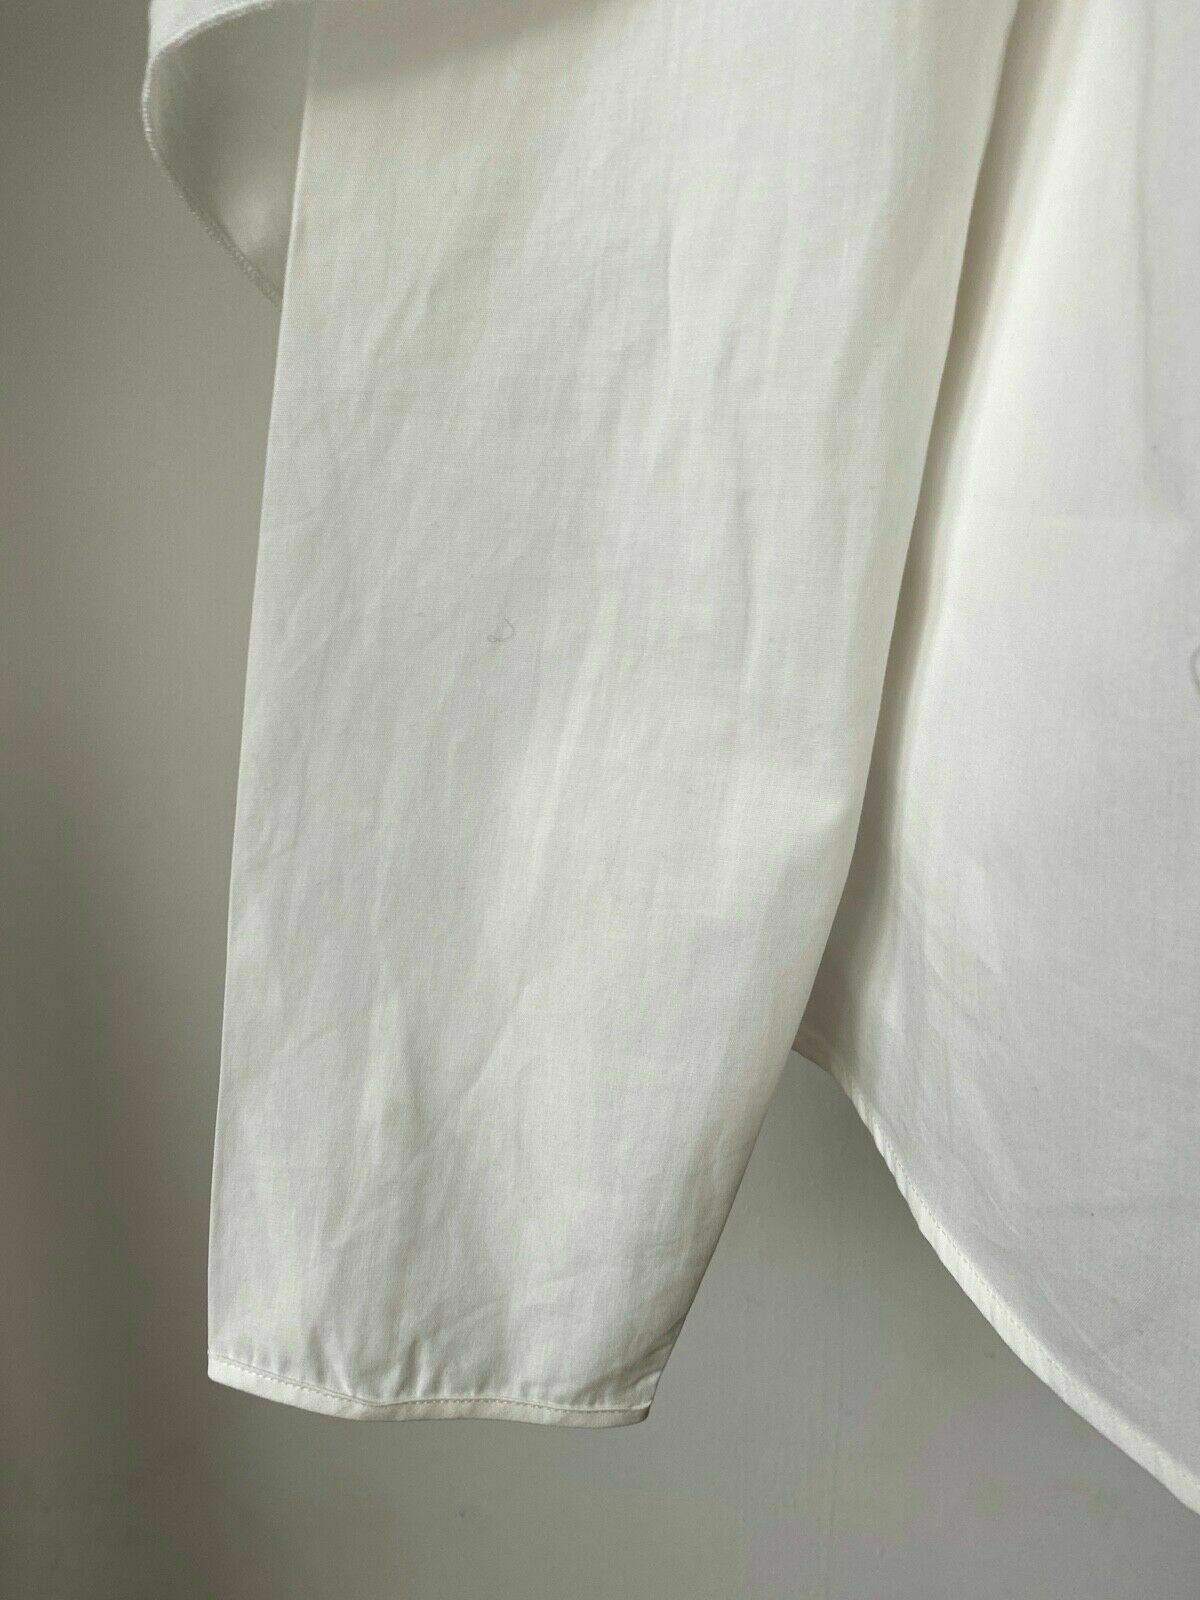 VILA VIJENNER Long Sleeve Top Off White Size XL 14 Frill